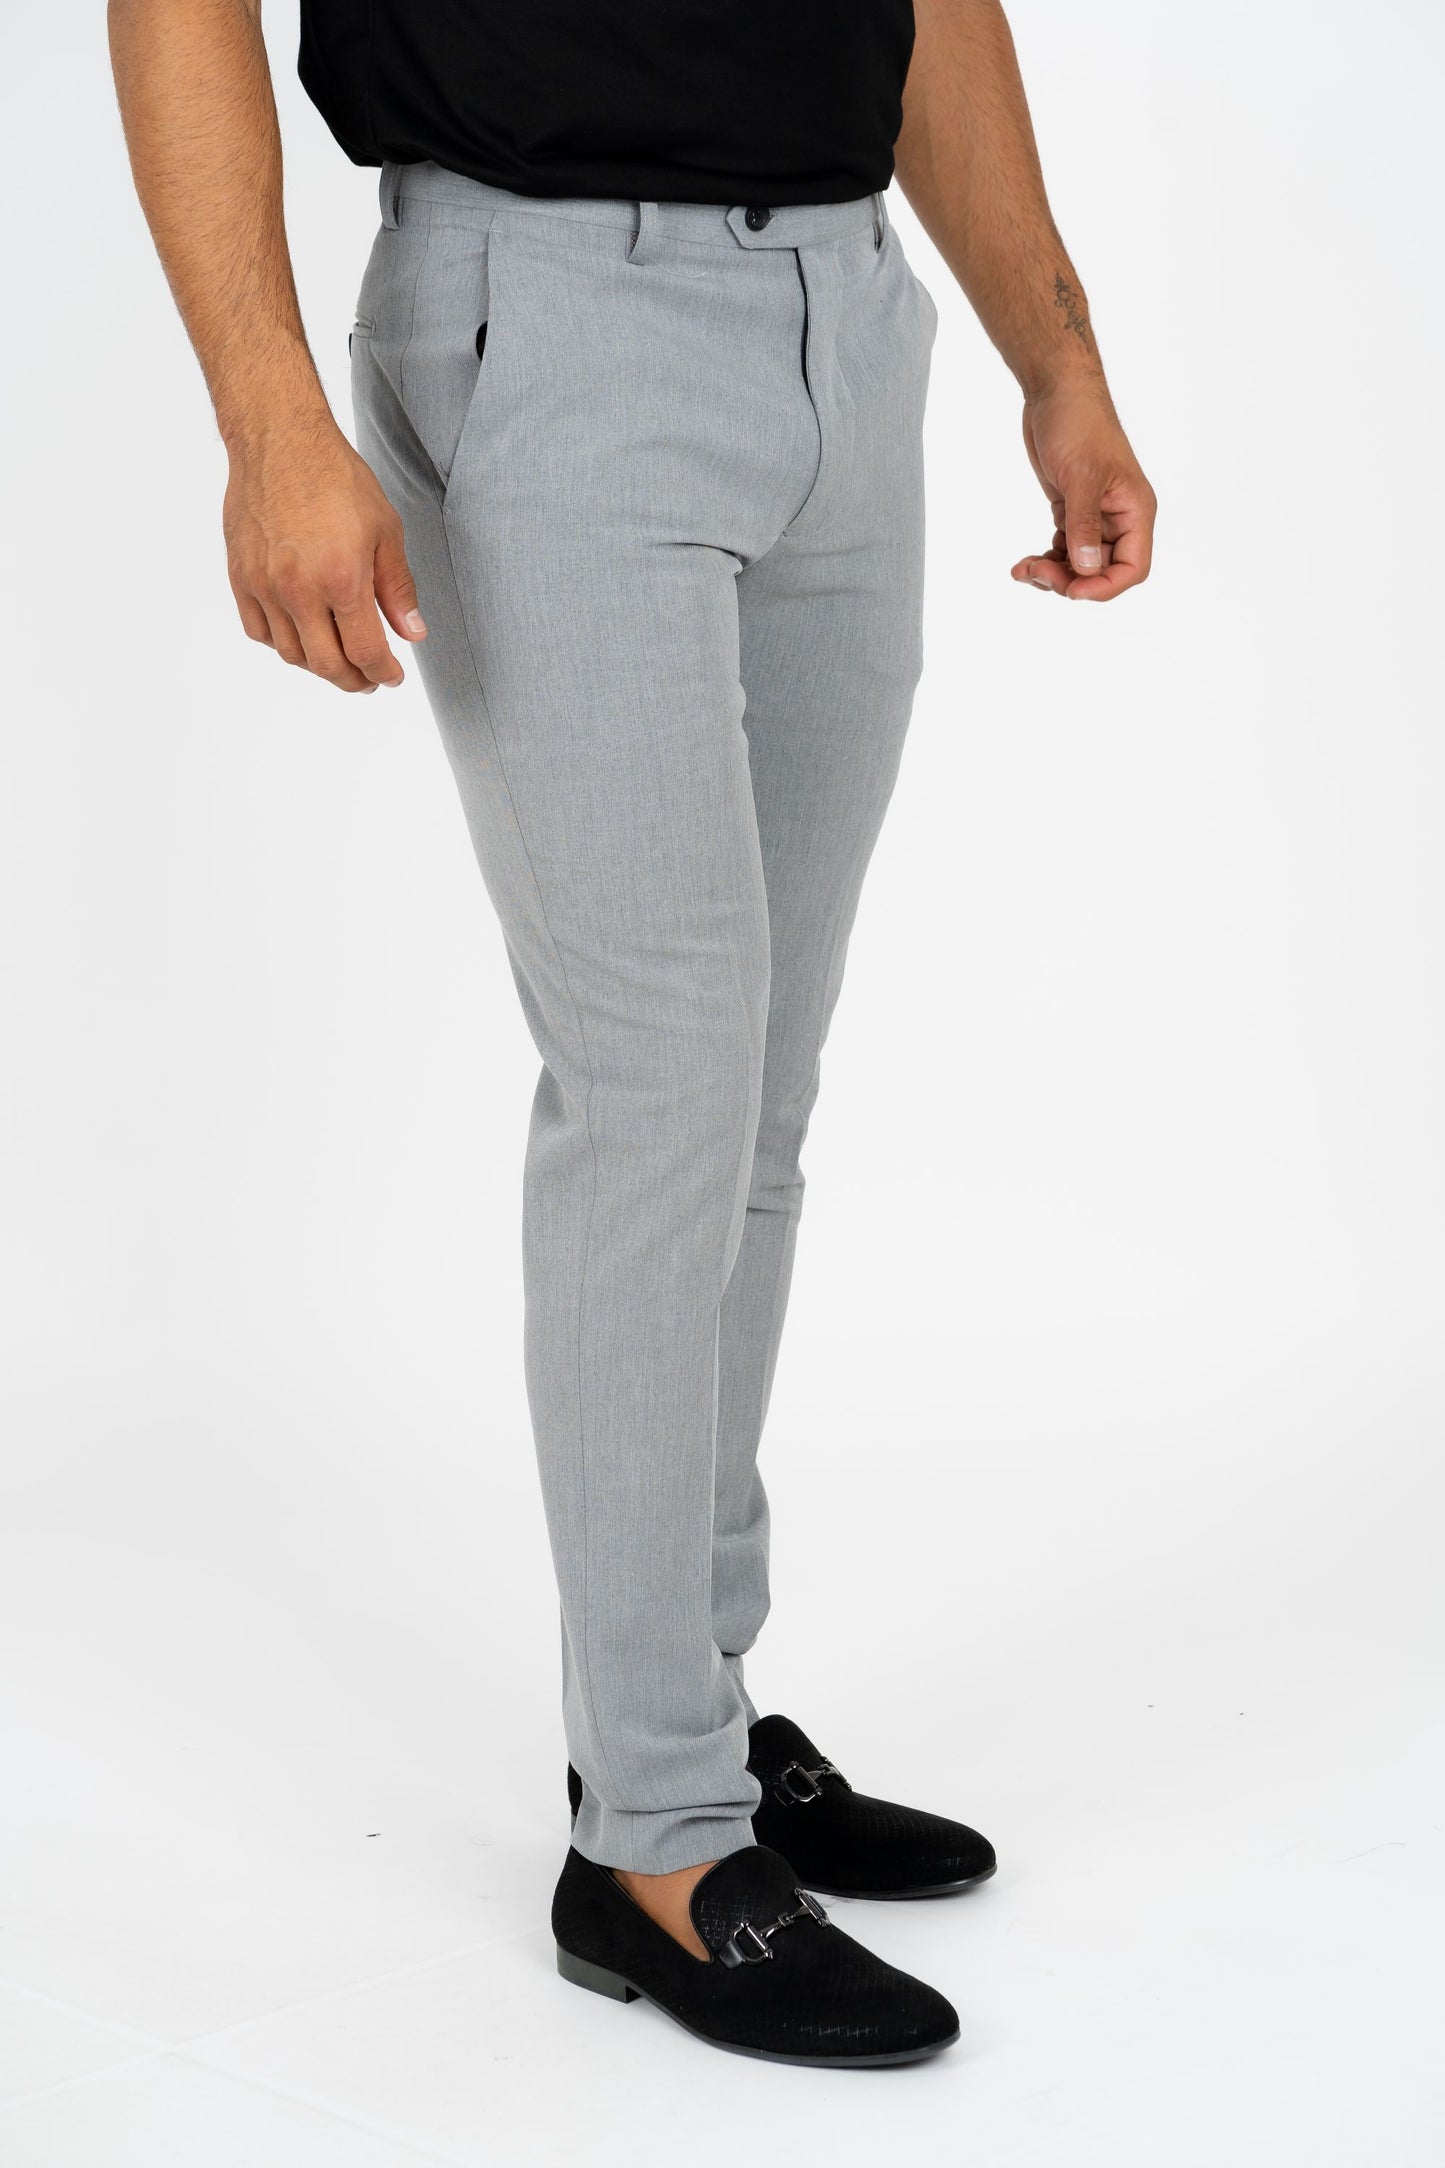 Heath Men's Light Gray Super Slim Dress Pants